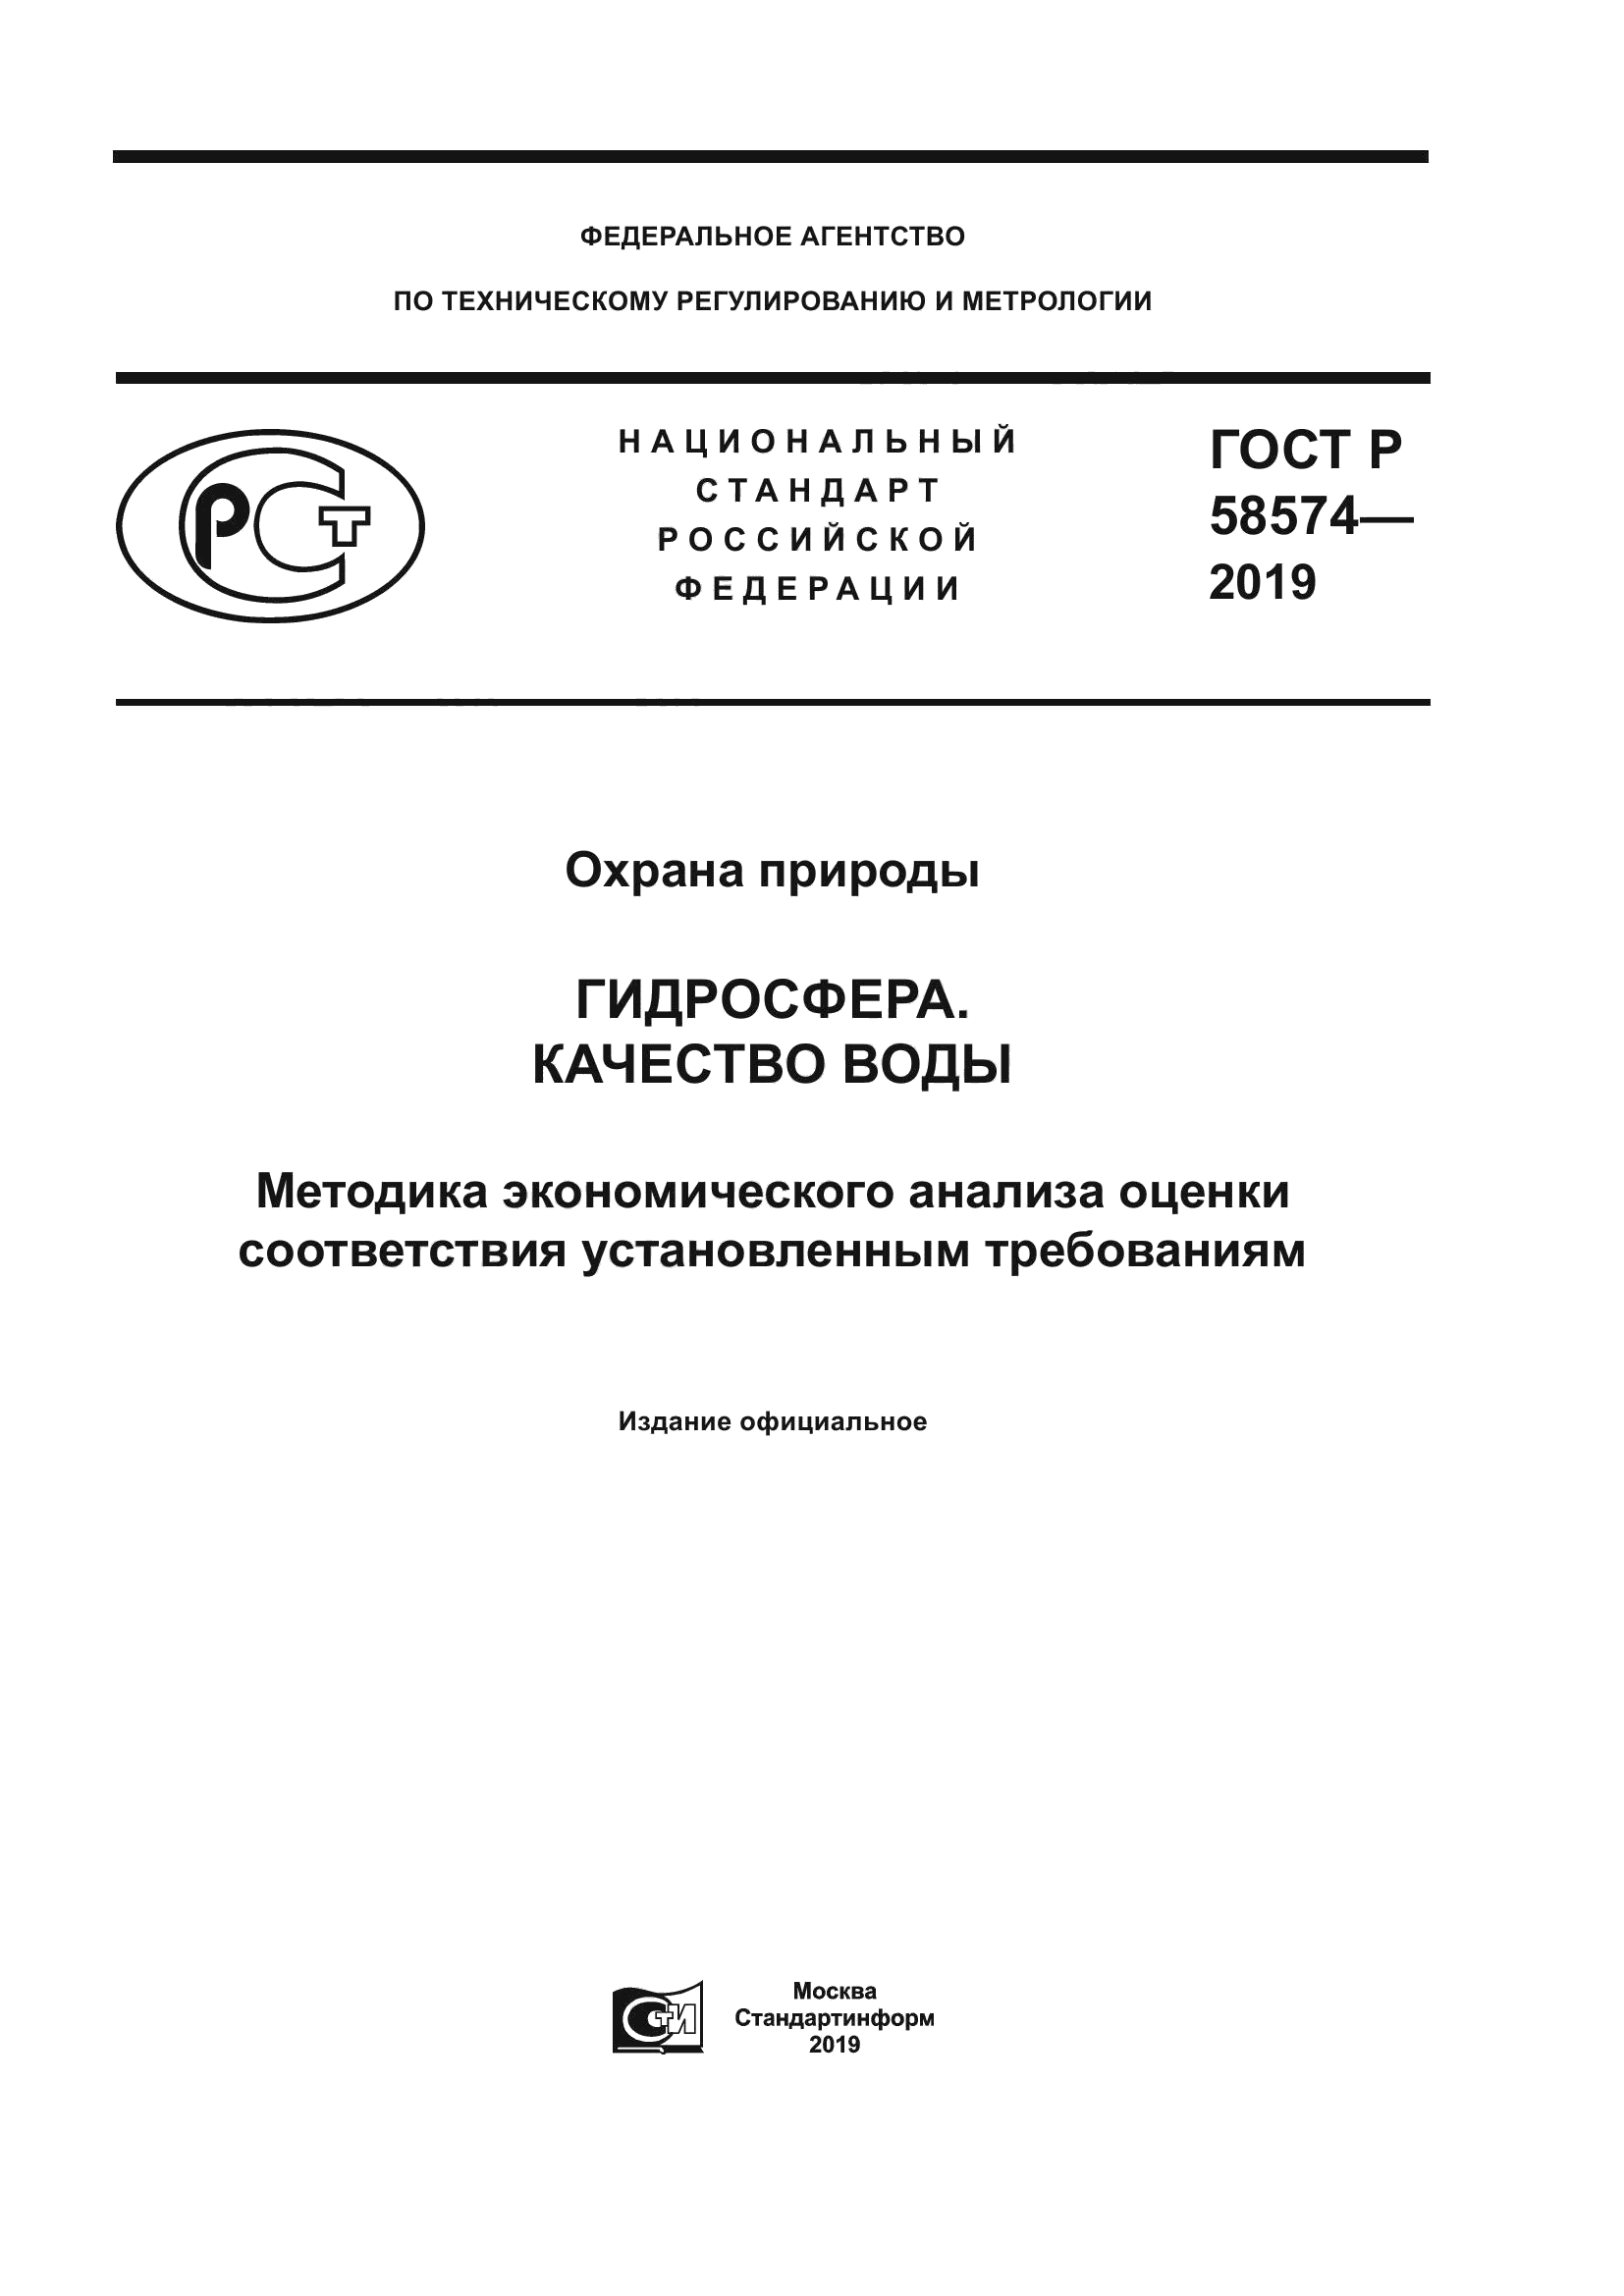 ГОСТ Р 58574-2019